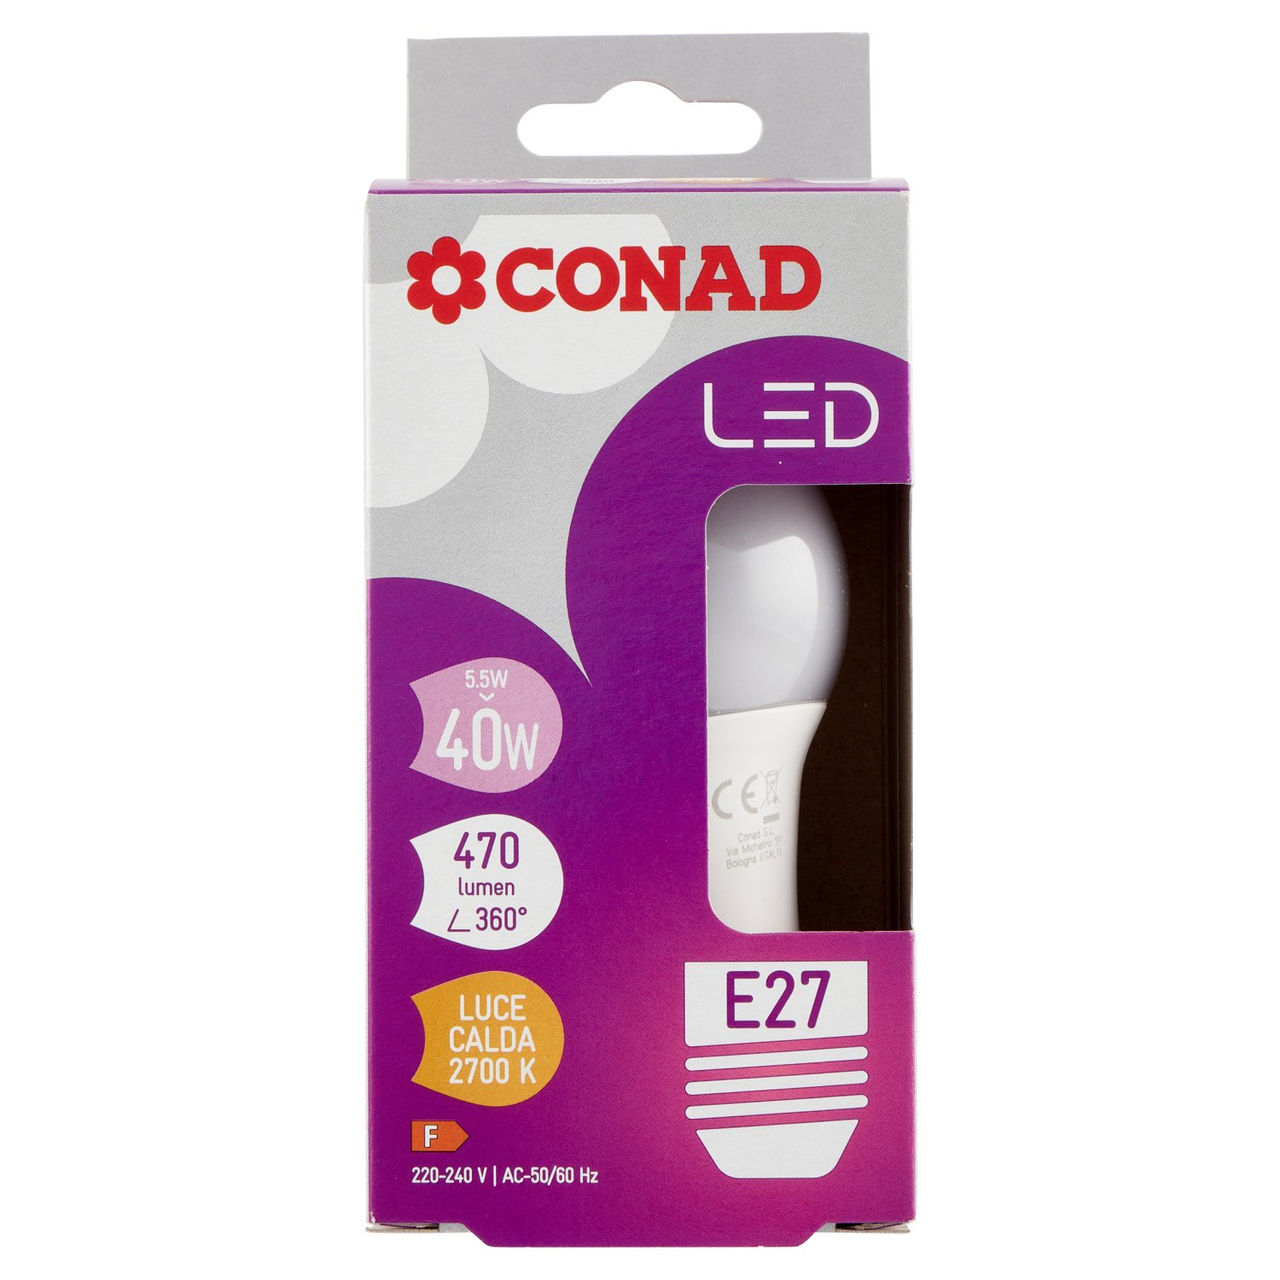 CONAD Led 5.5W 470 lumen E27 Luce Calda